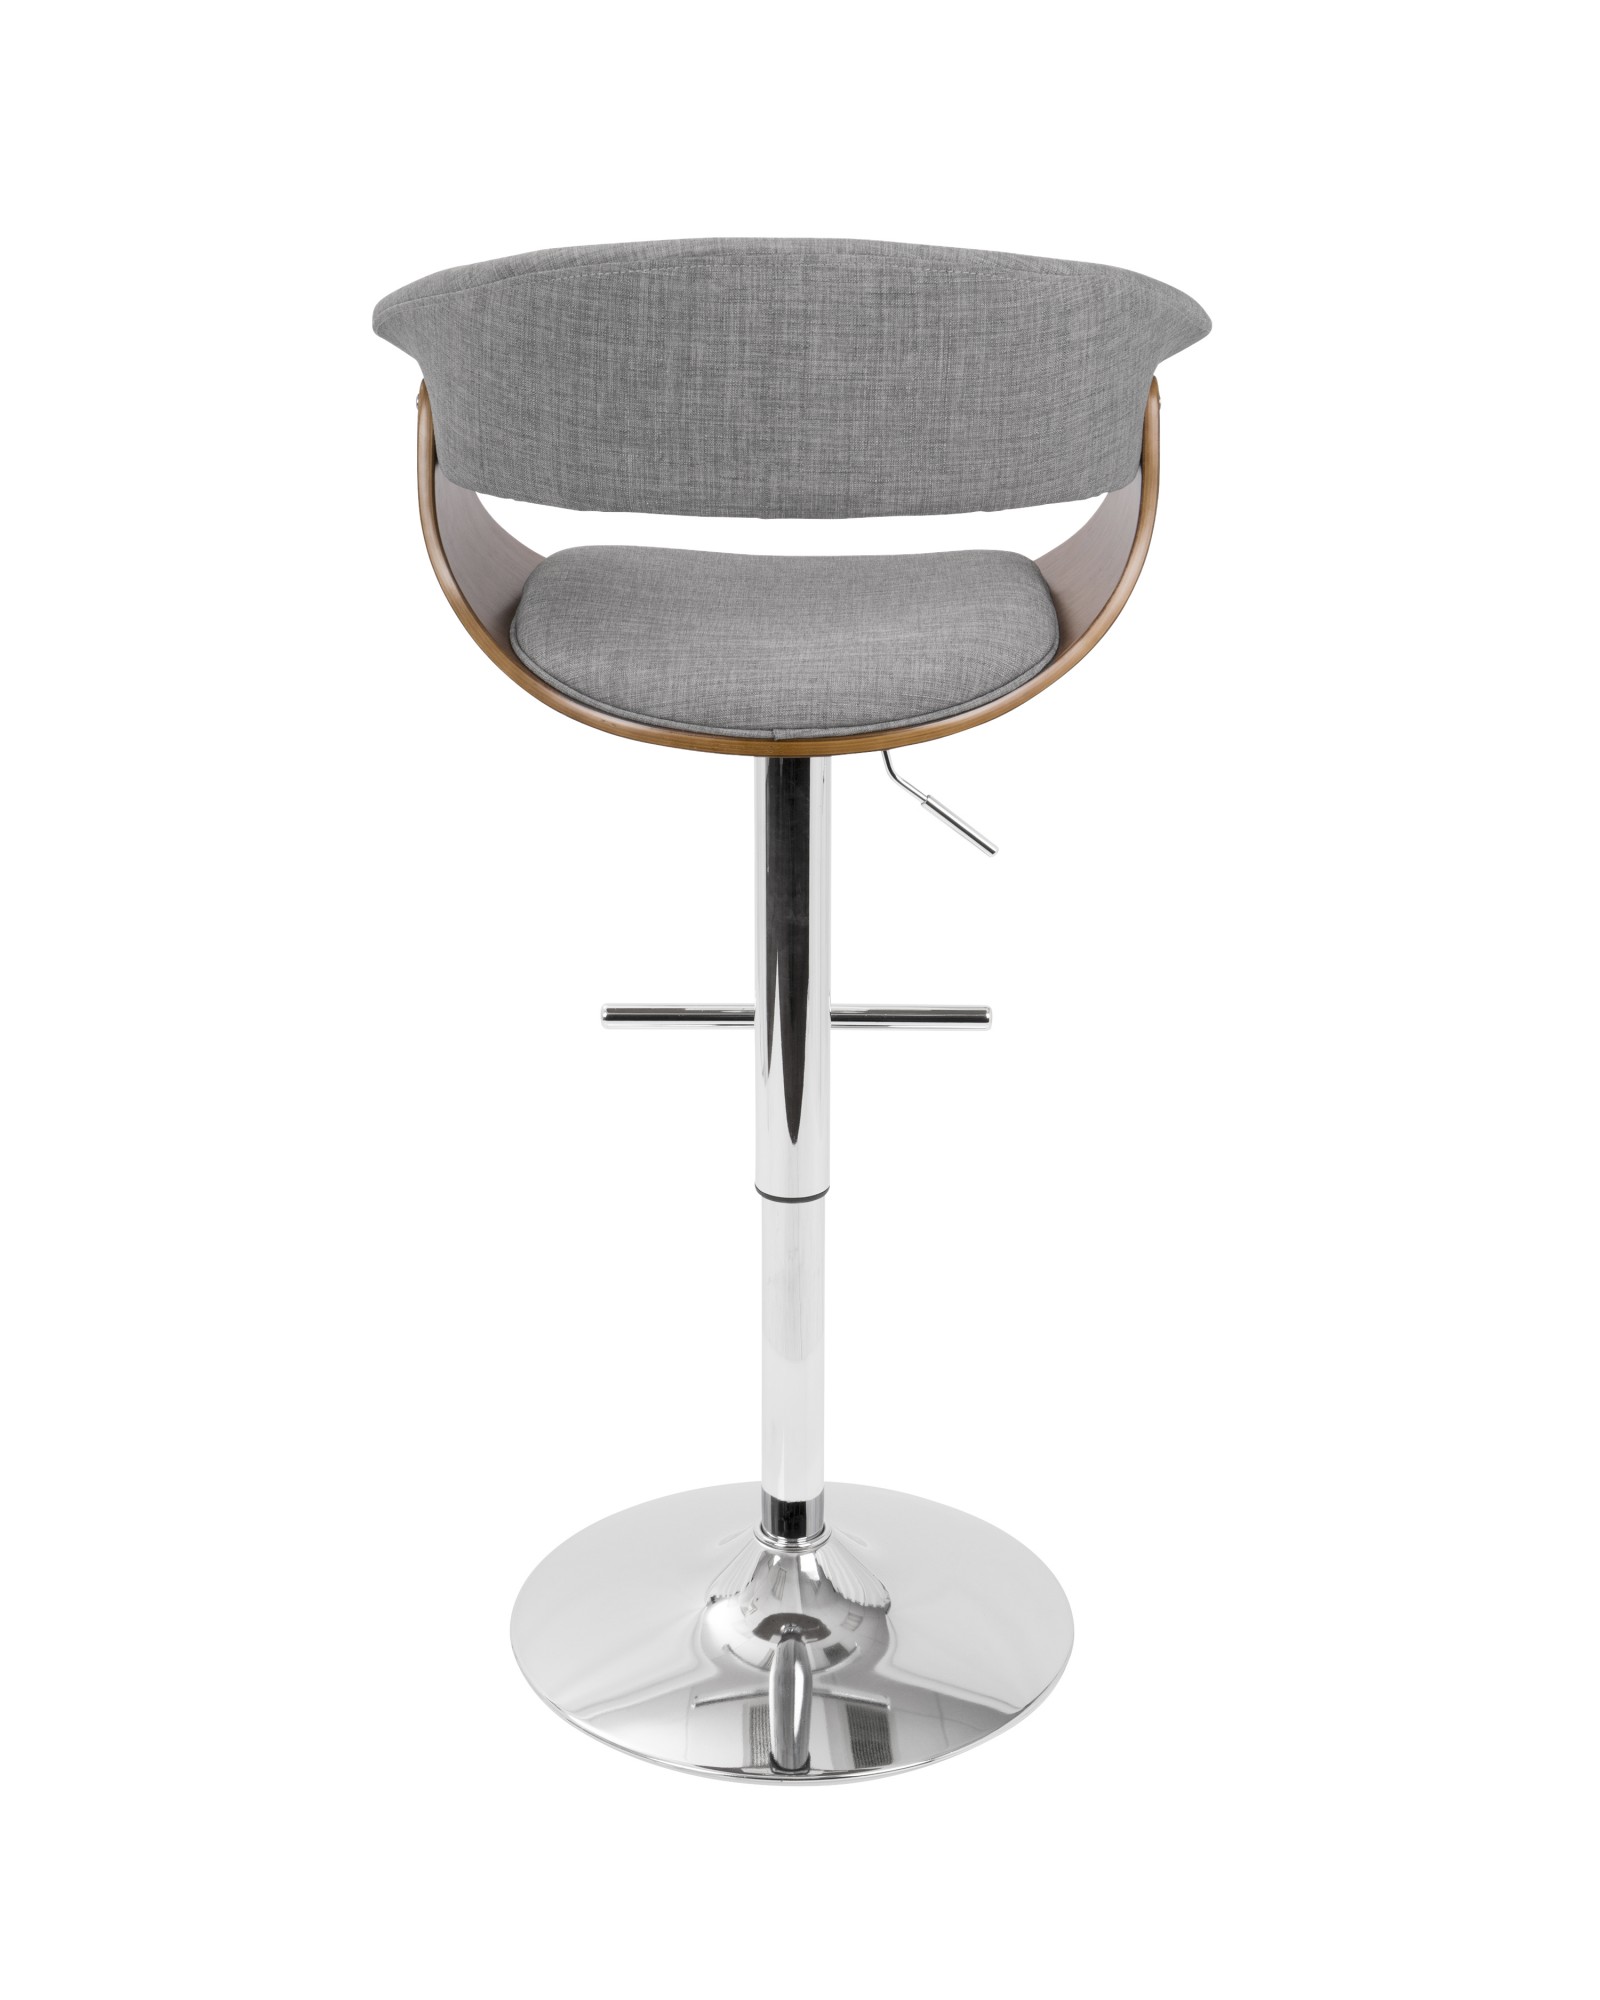 Vintage Mod Mid-Century Modern Adjustable Barstool with Swivel in Walnut and Light Grey Fabric